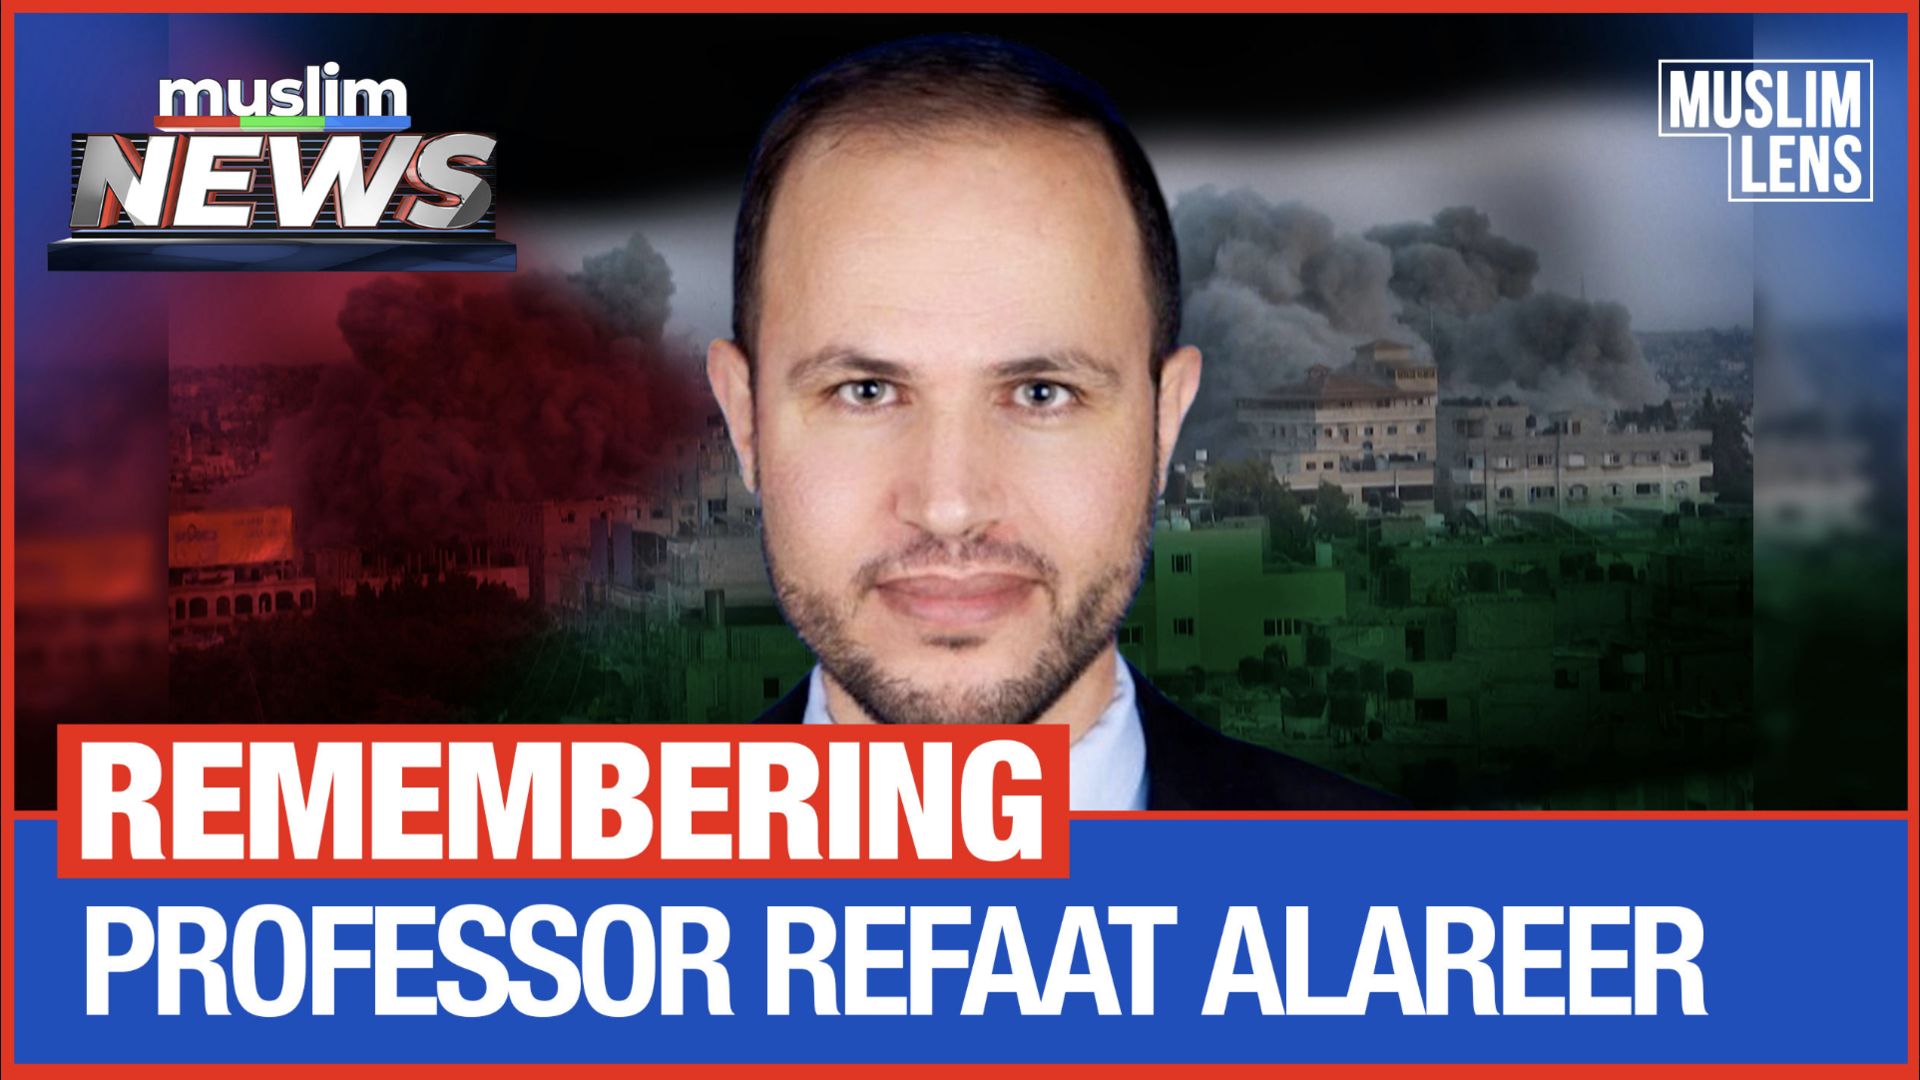 Remembering Professor Refaat Alareer